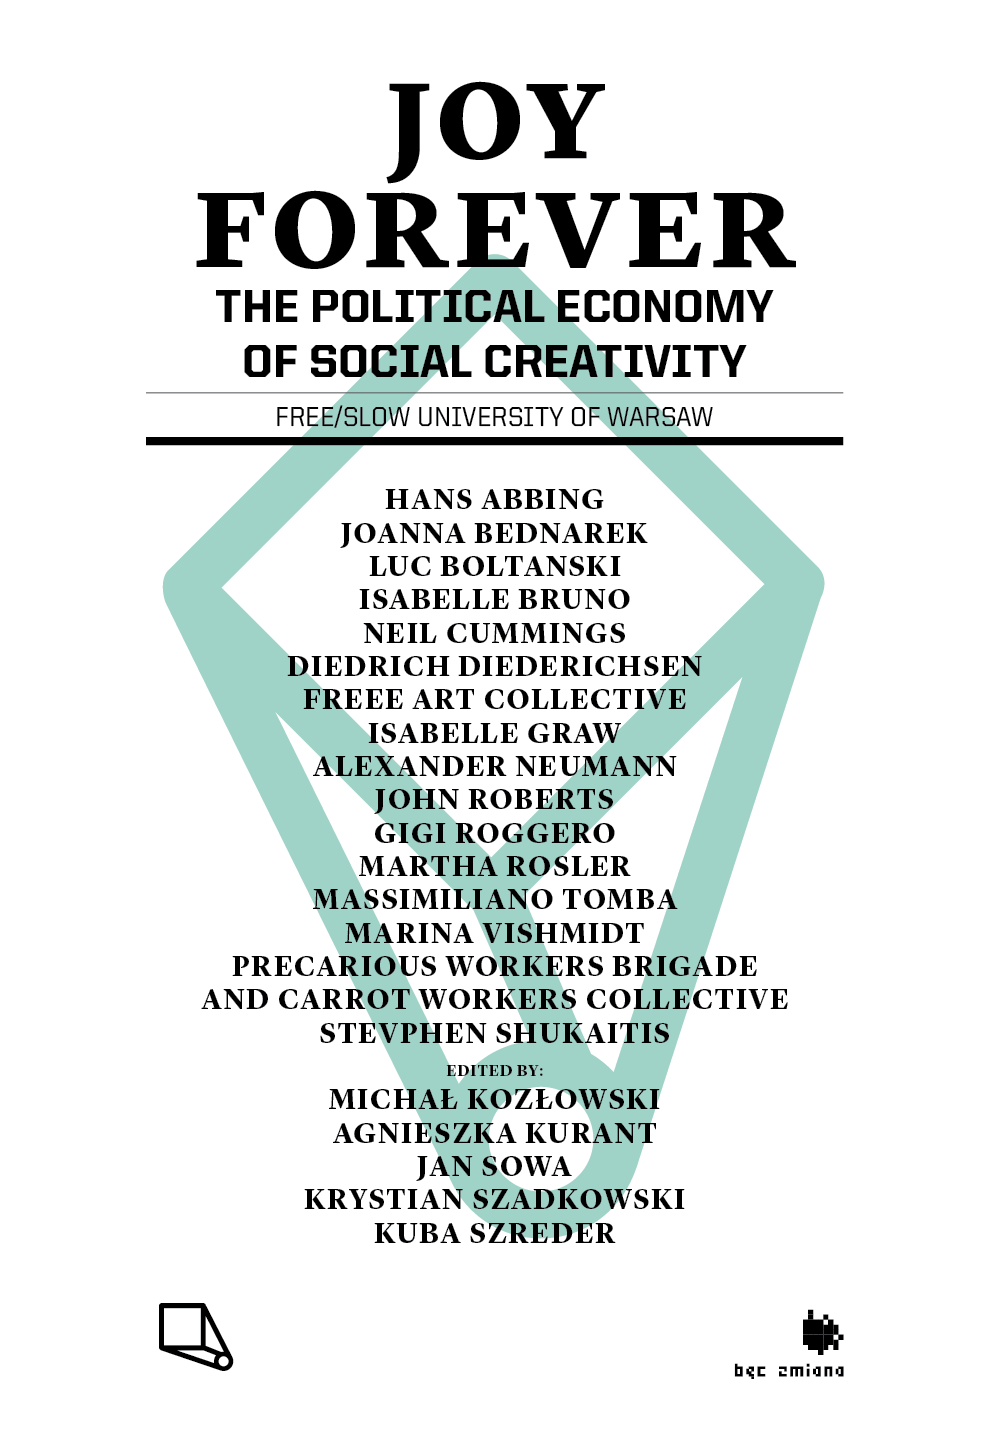 Joy Forever: The Political Economy of Social Creativity